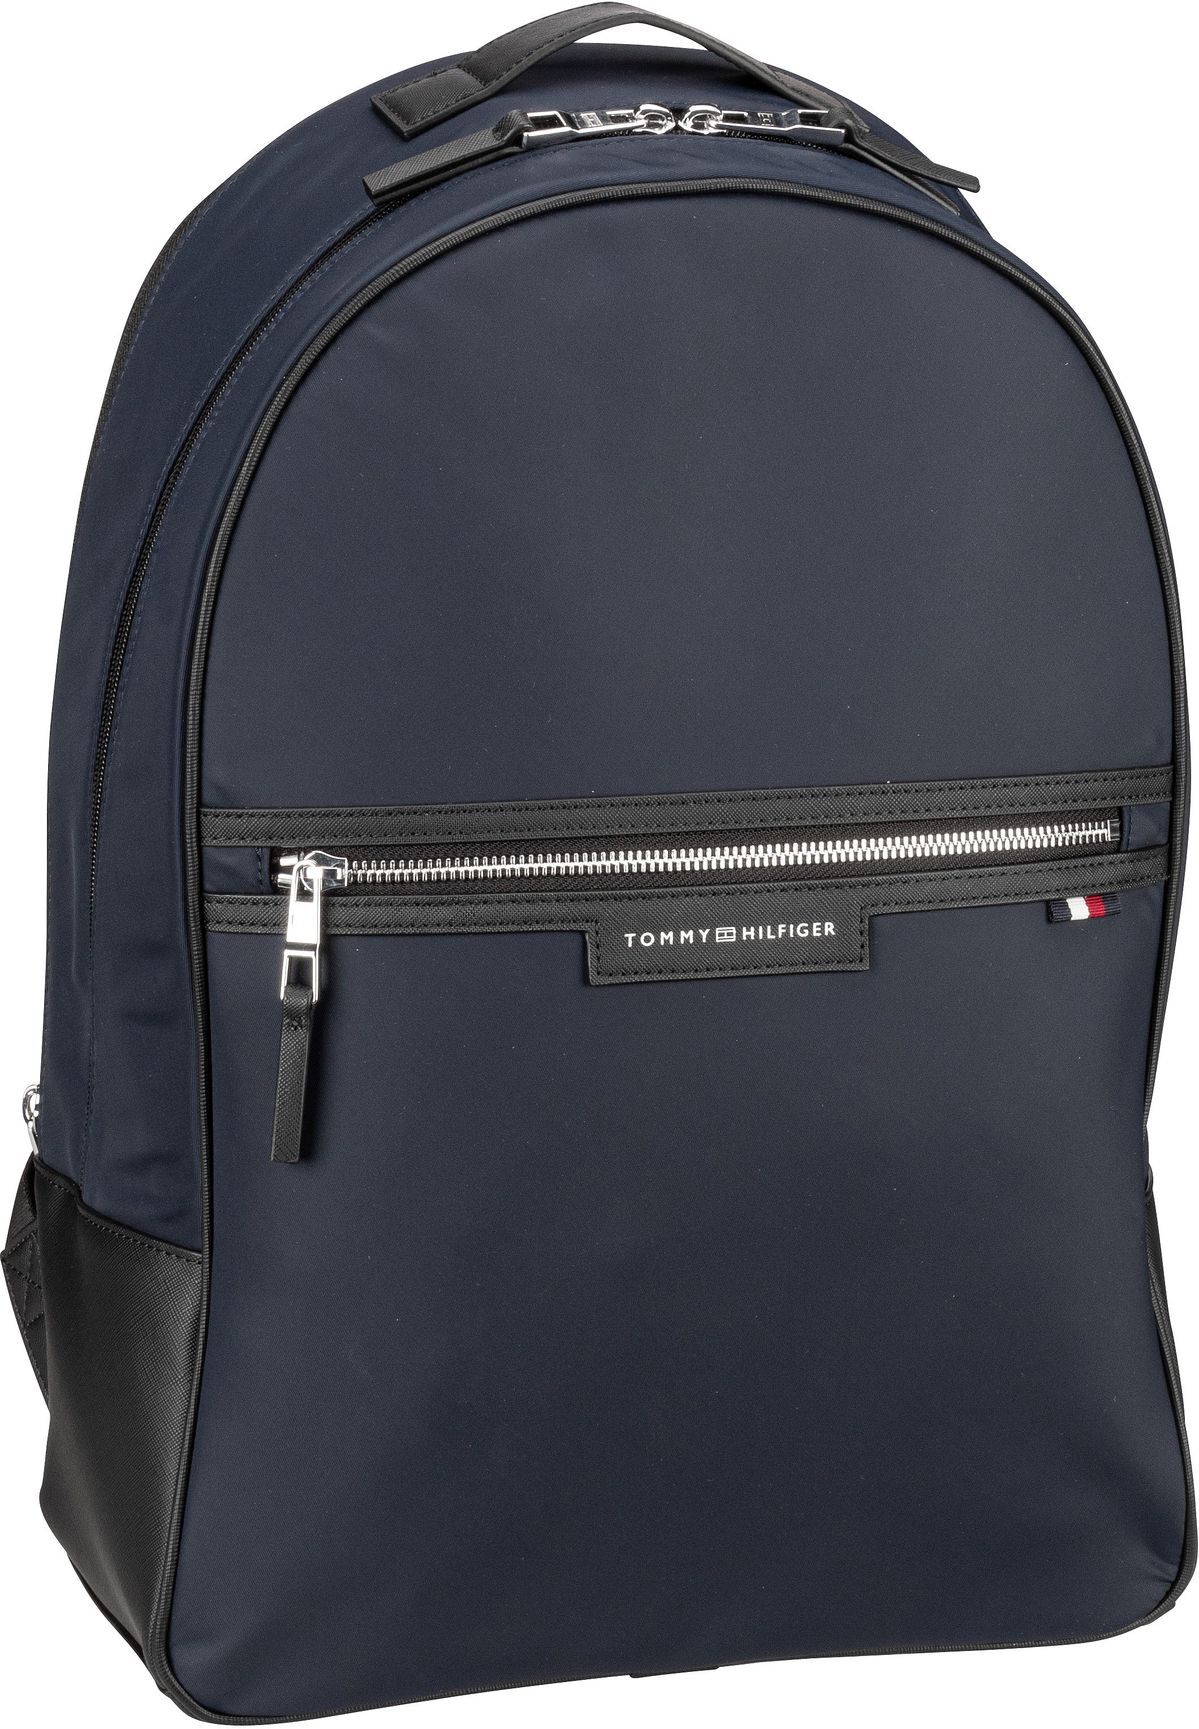 Tommy Hilfiger TH Urban Repreve Backpack PSP24  in Space Blue (22.6 Liter), Rucksack / Backpack